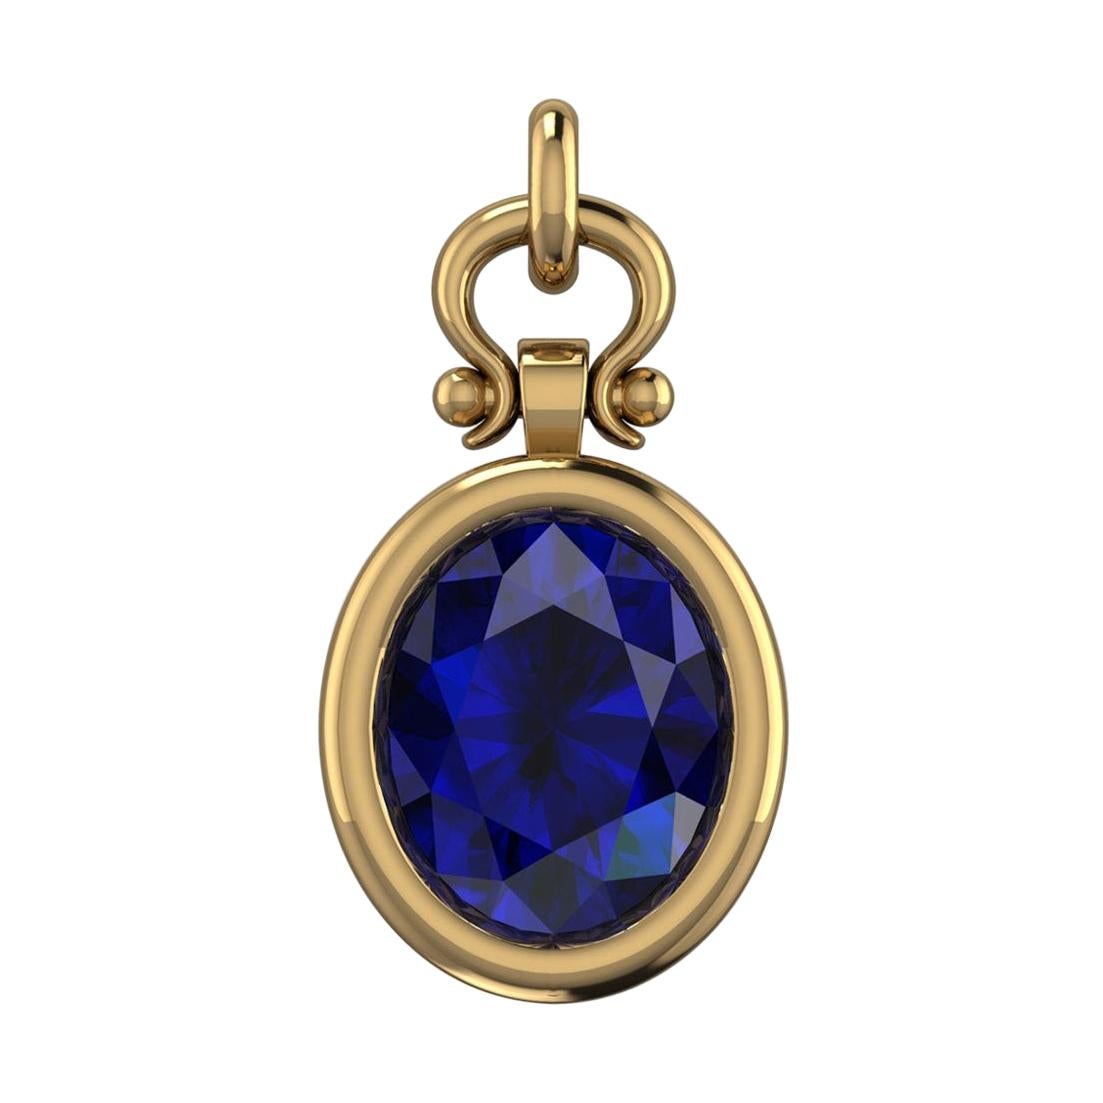 Collier pendentif en or 18 carats avec saphir bleu ovale certifié Berberyn de 4,28 carats